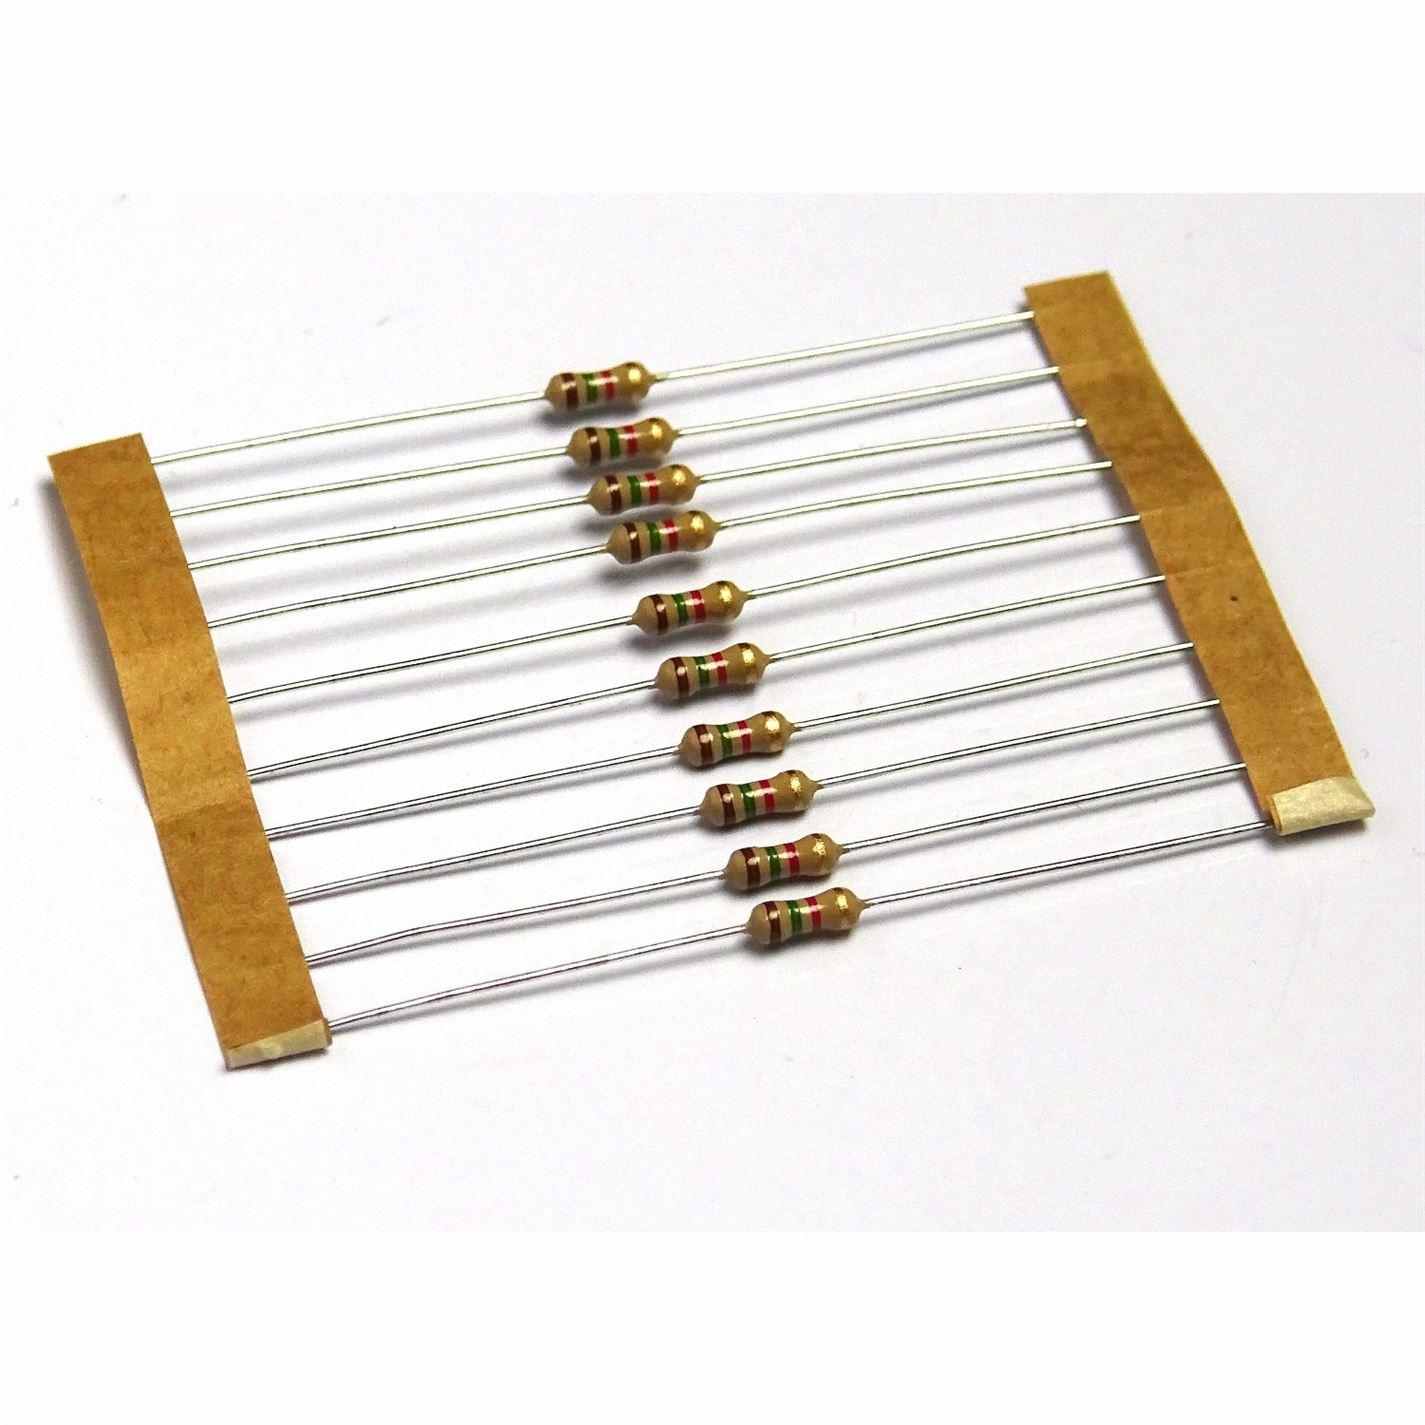 10 x Resistors 1.5K OHM Ohms 1/4W 0.25W 5% Carbon Film - UK Seller